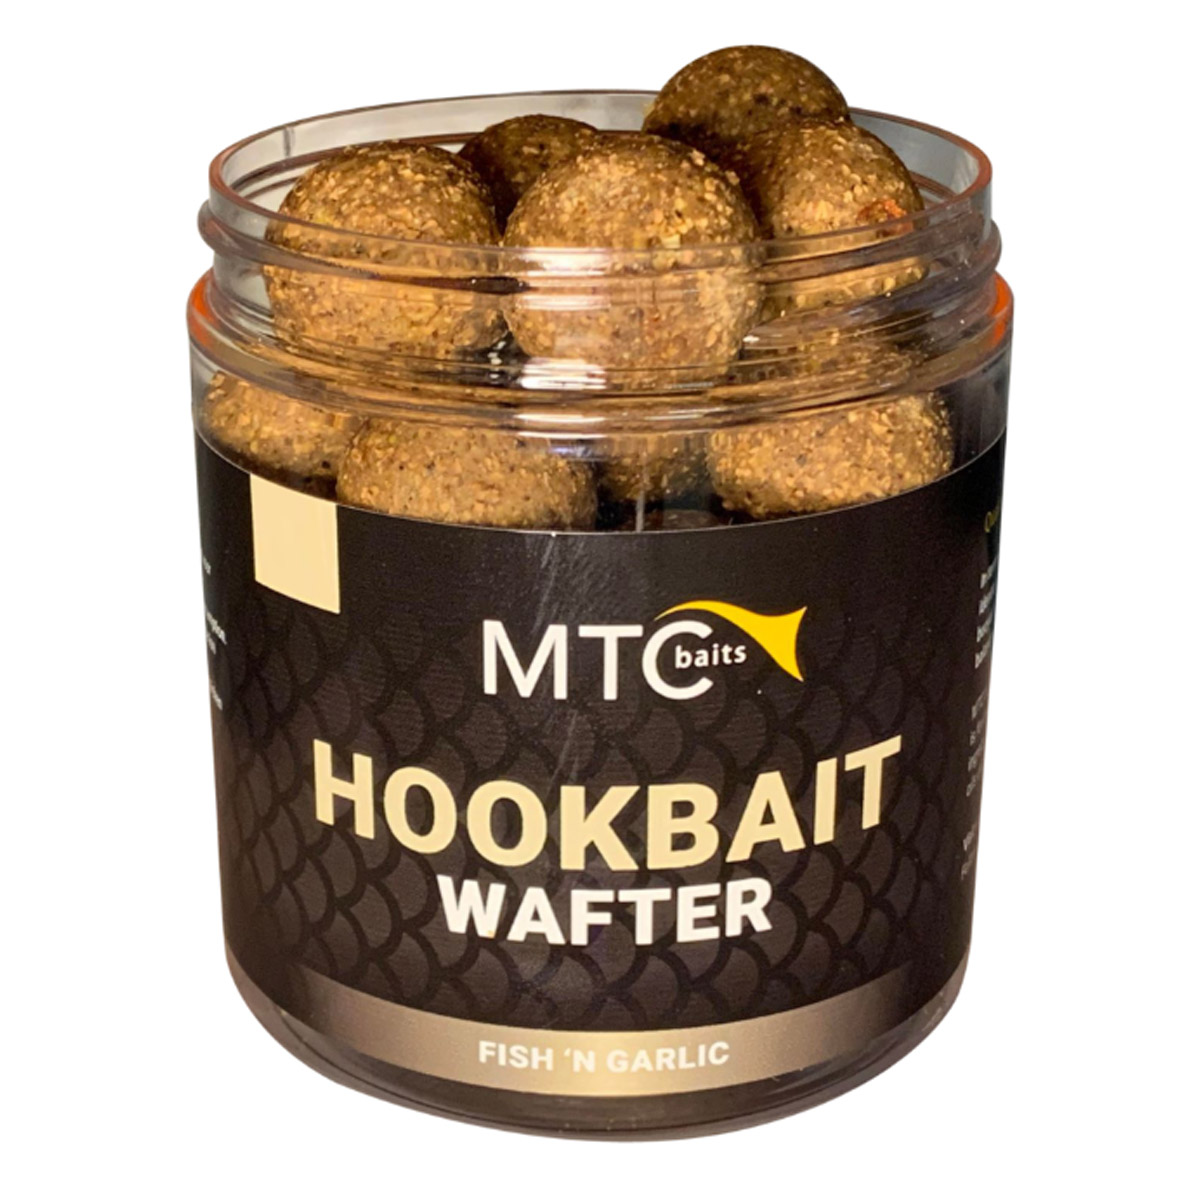 MTC Baits Hookbait Wafter Fish 'n Garlic 24 MM